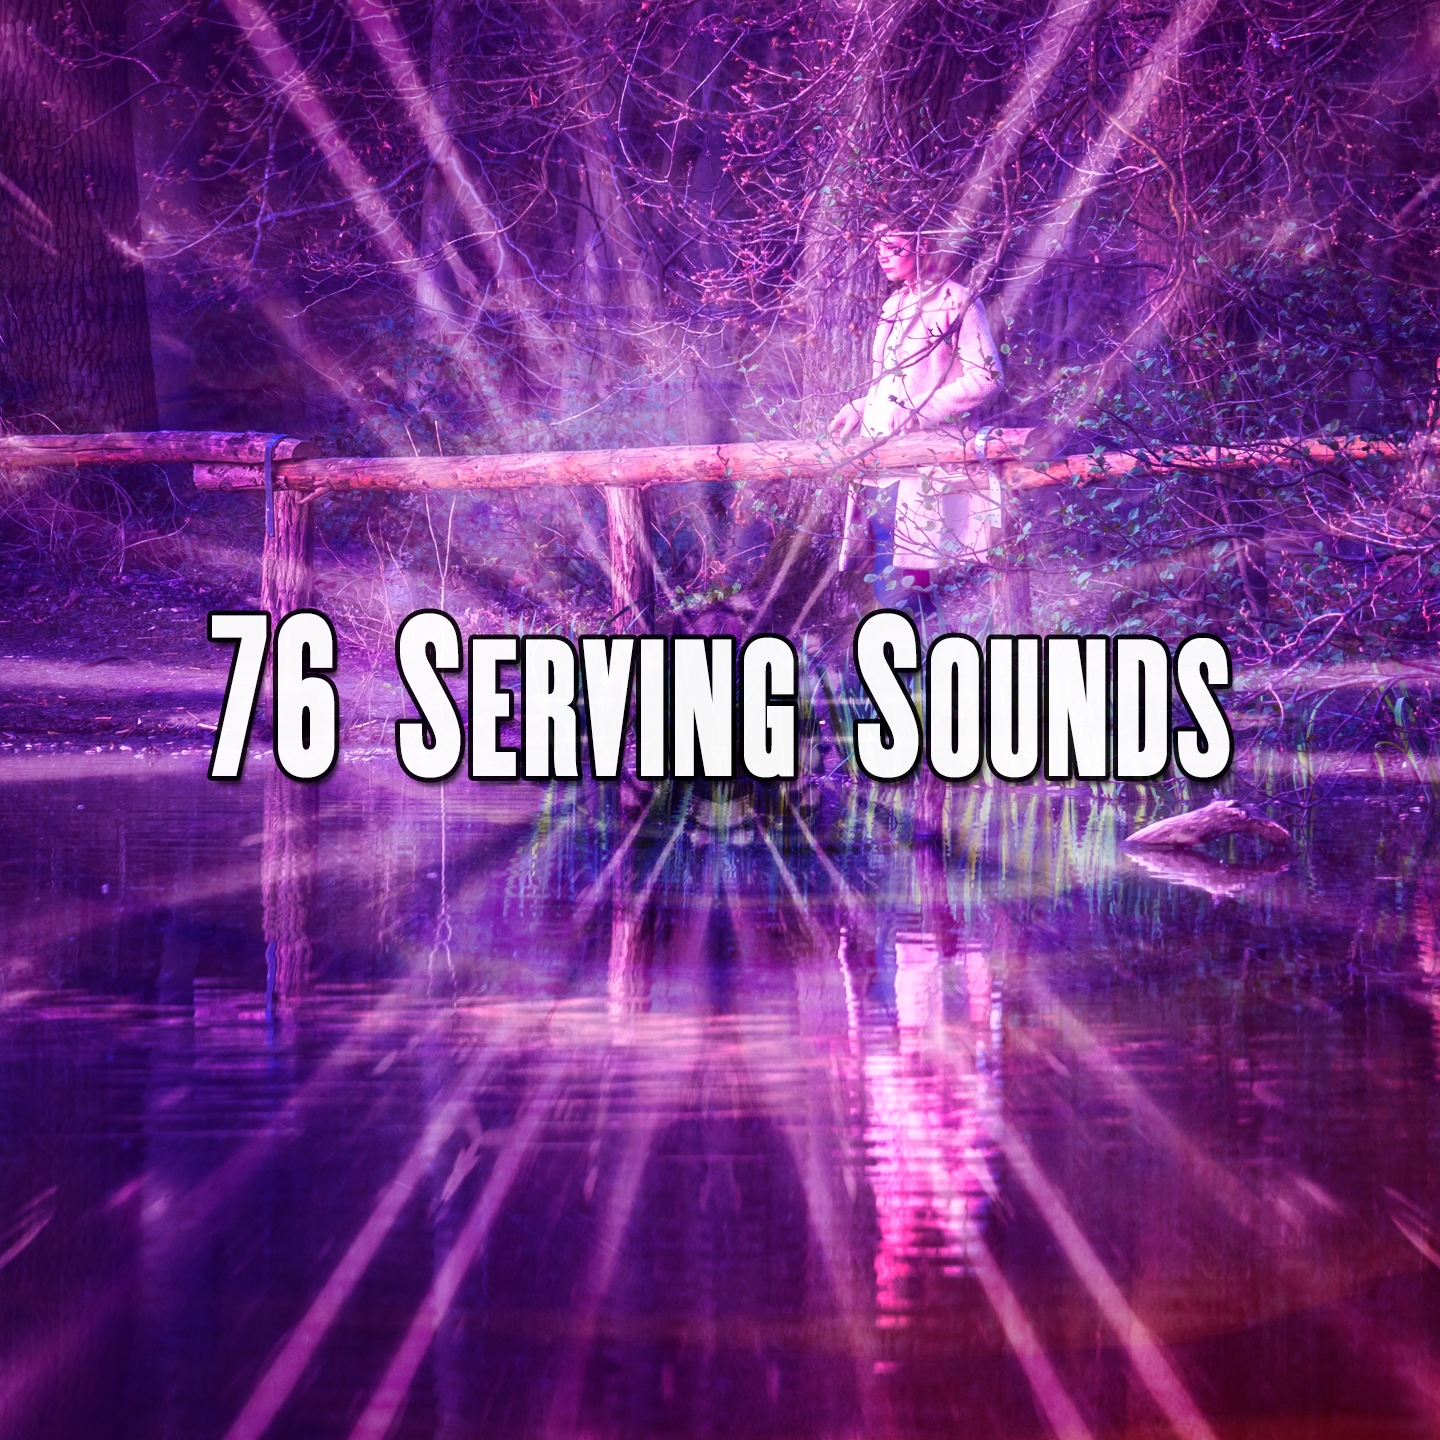 76 Serving Sounds